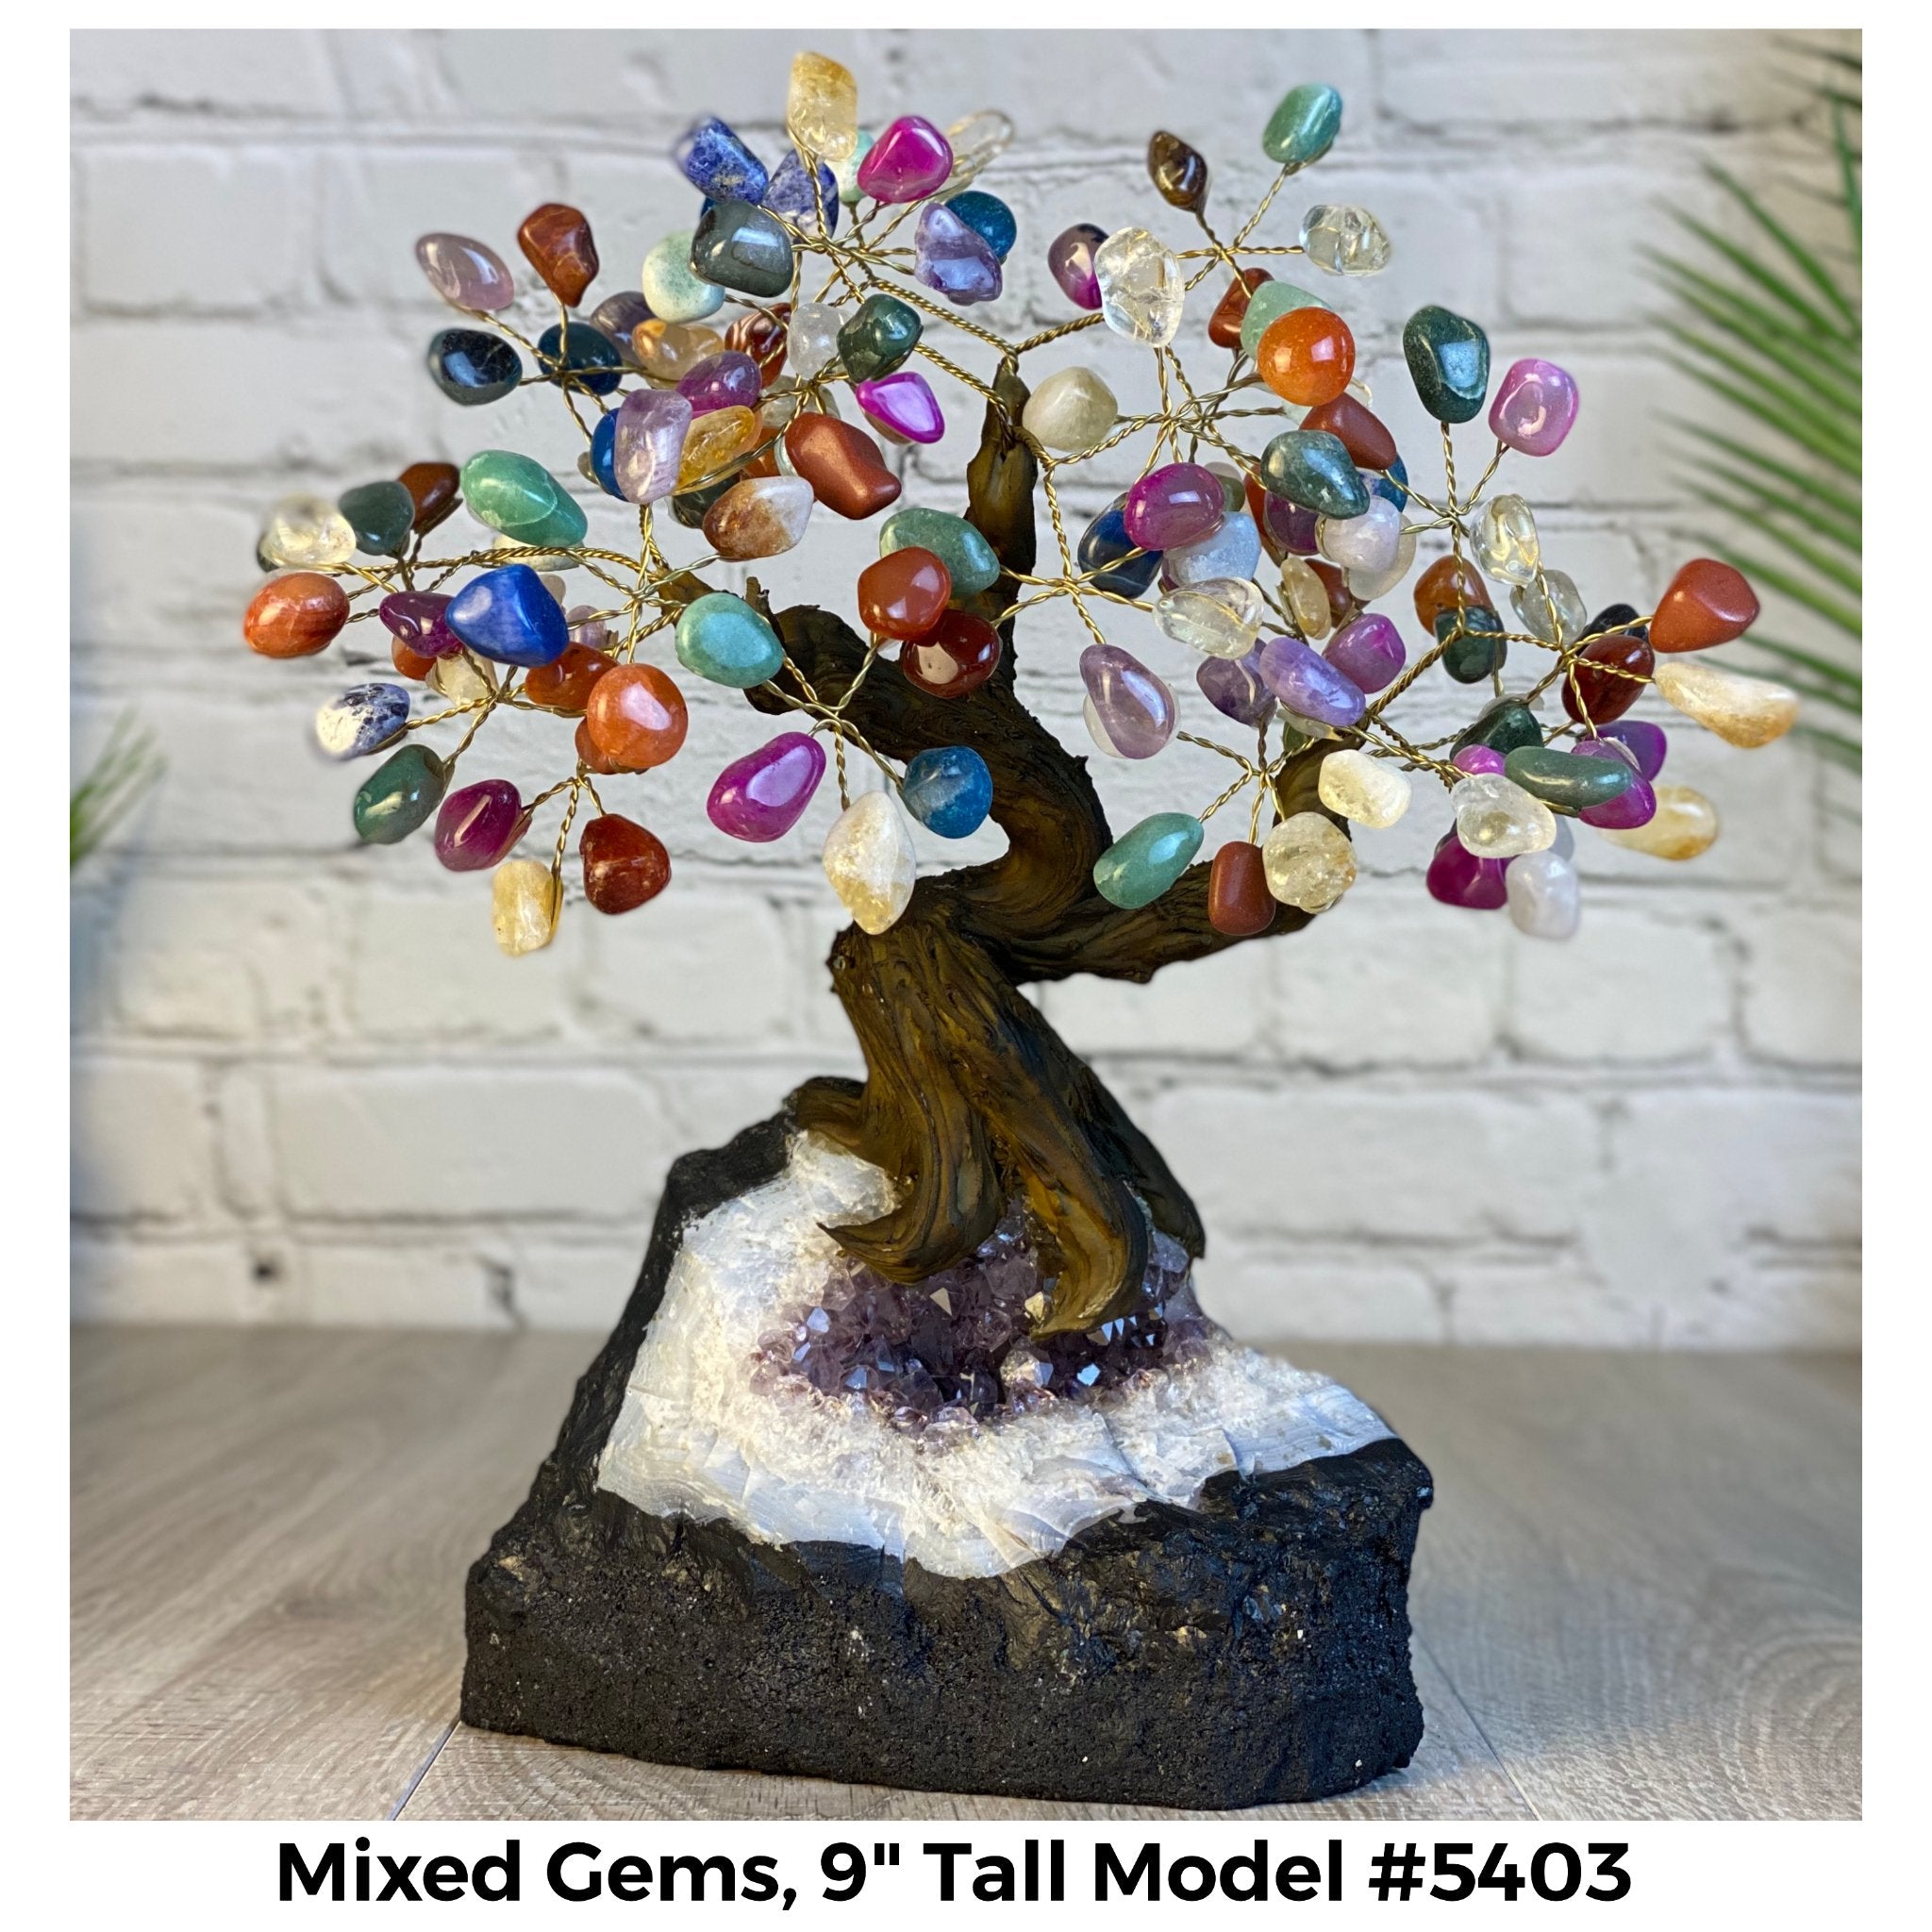 Mixed Gems 9" Tall Handmade Gemstone Tree on a Crystal base, 120 Gems #5403MIXD - Brazil GemsBrazil GemsMixed Gems 9" Tall Handmade Gemstone Tree on a Crystal base, 120 Gems #5403MIXDGemstone Trees5403MIXD